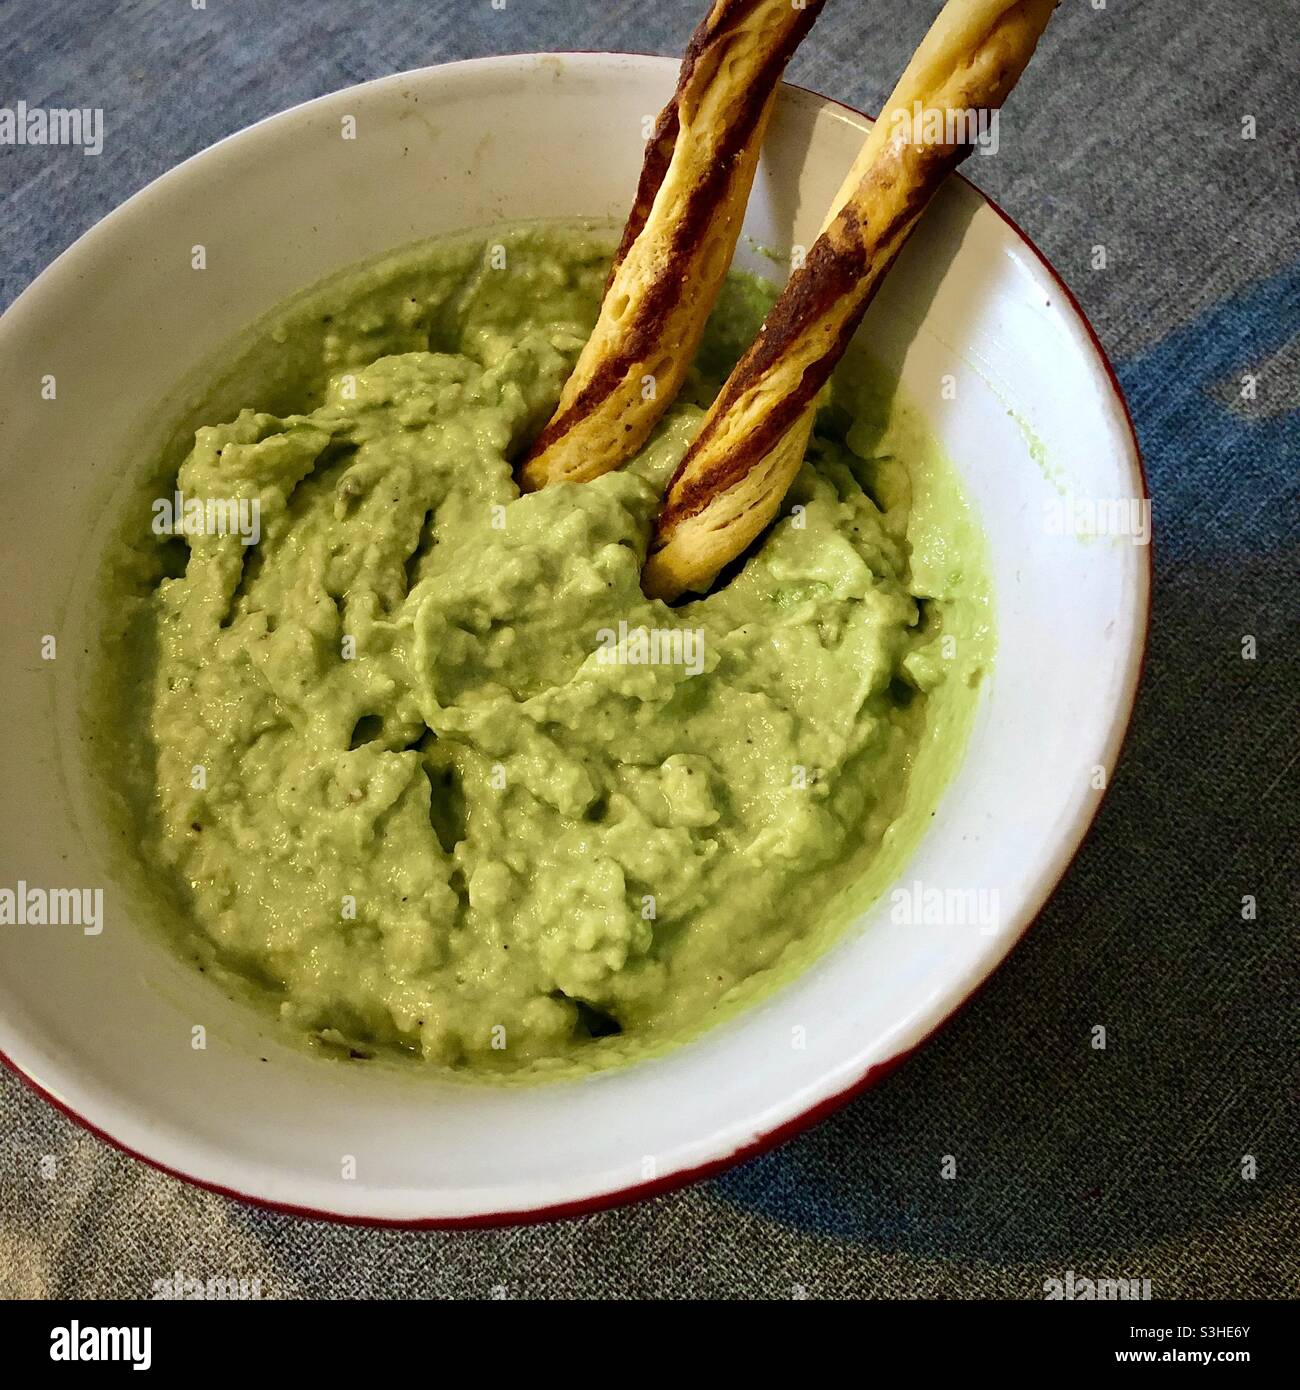 Homemade avocado dip in bowl with breadsticks. Stock Photo